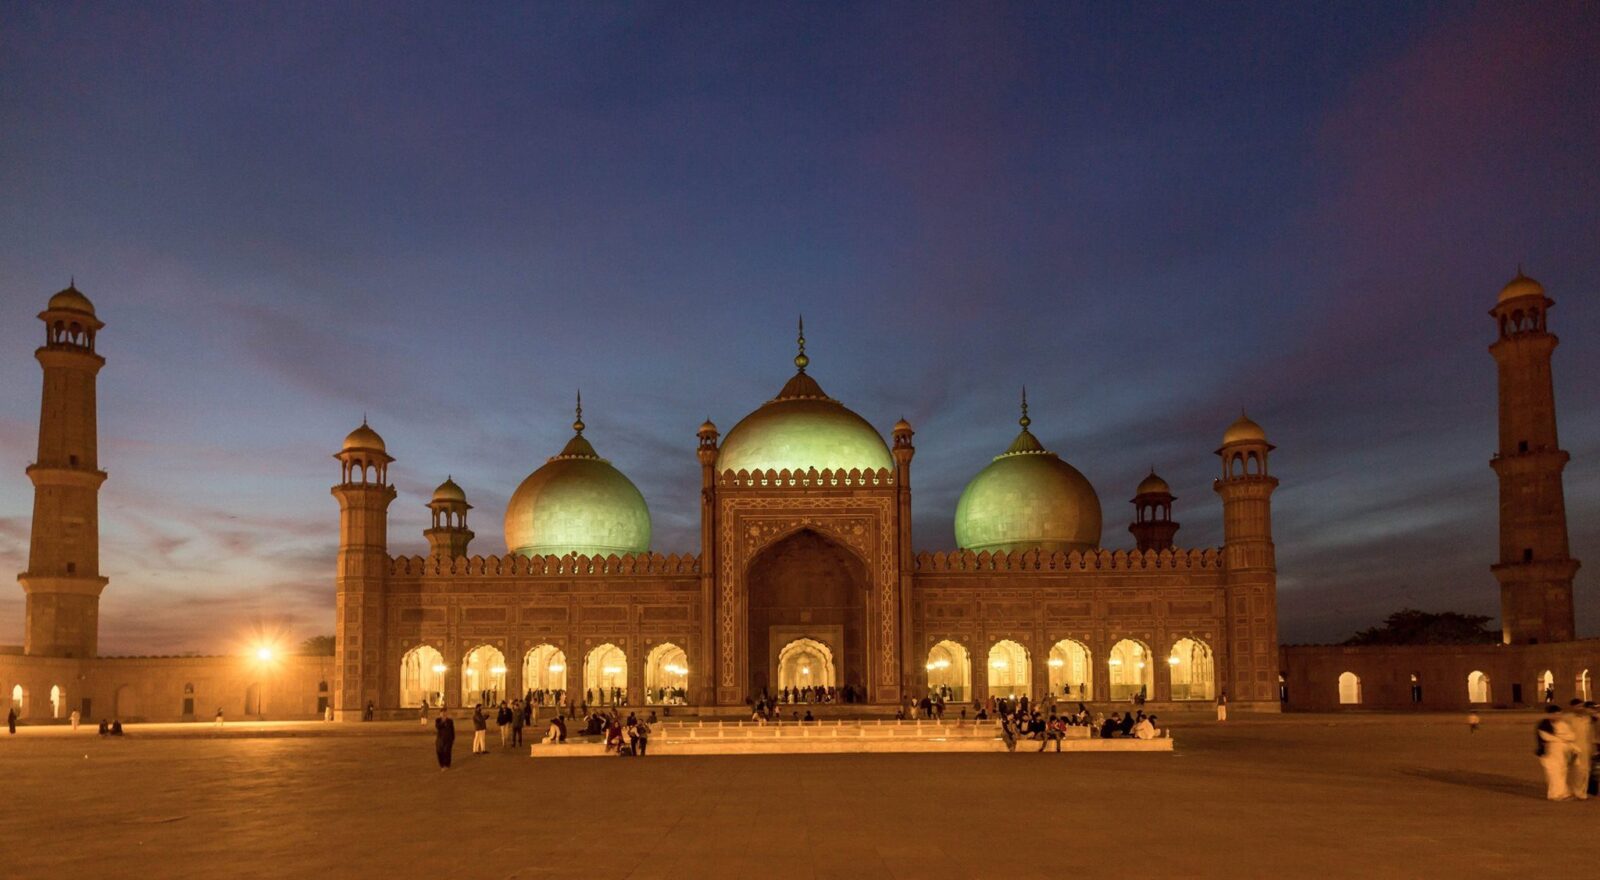 badshahi mosque pic